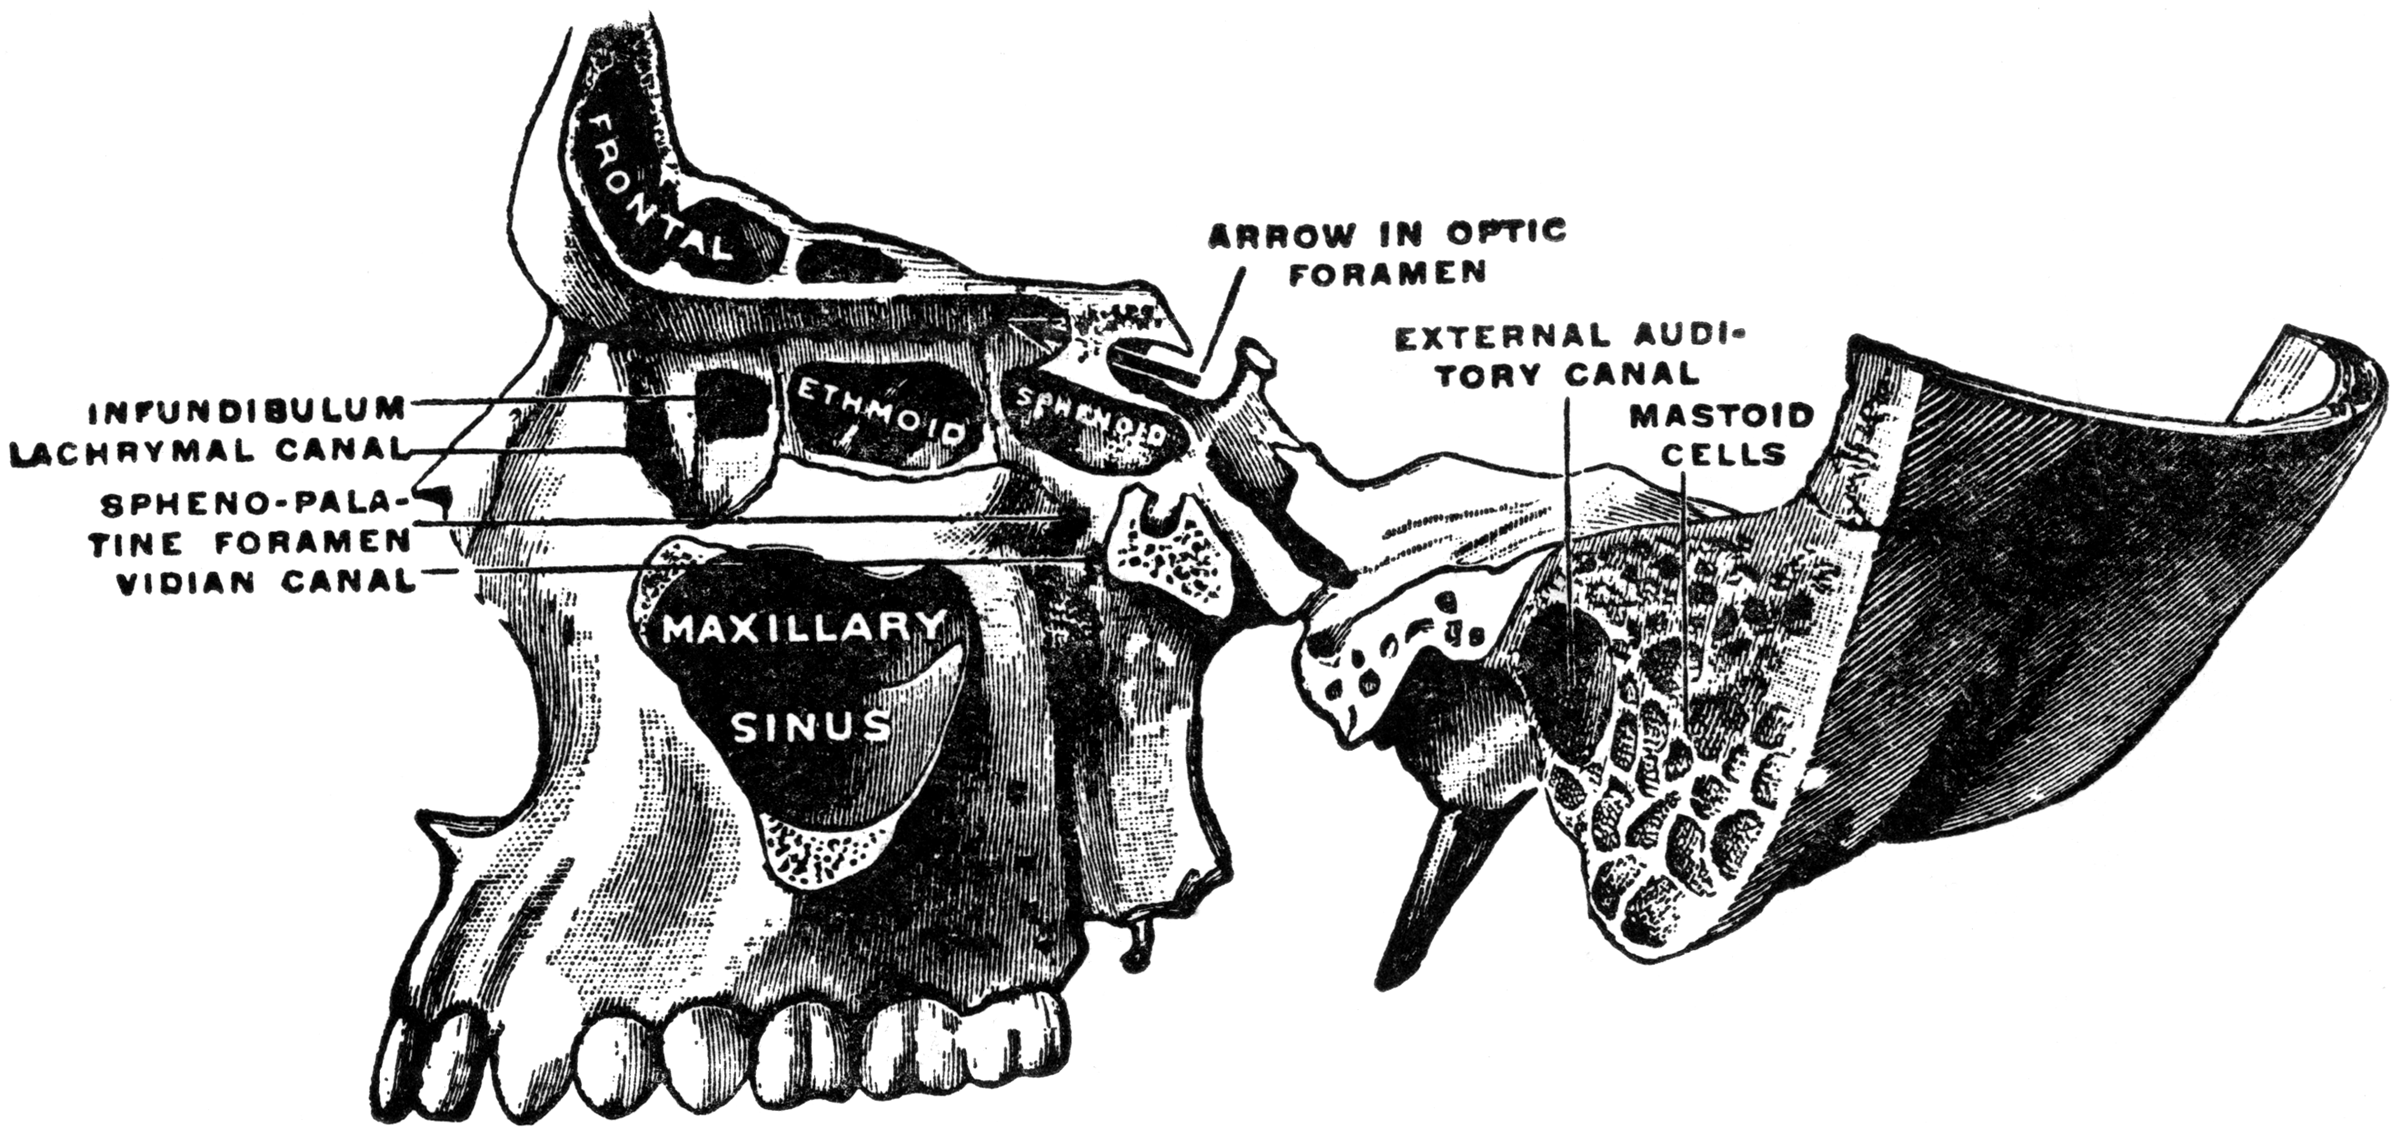 Superior Maxillary Bone and Sinuses | ClipArt ETC